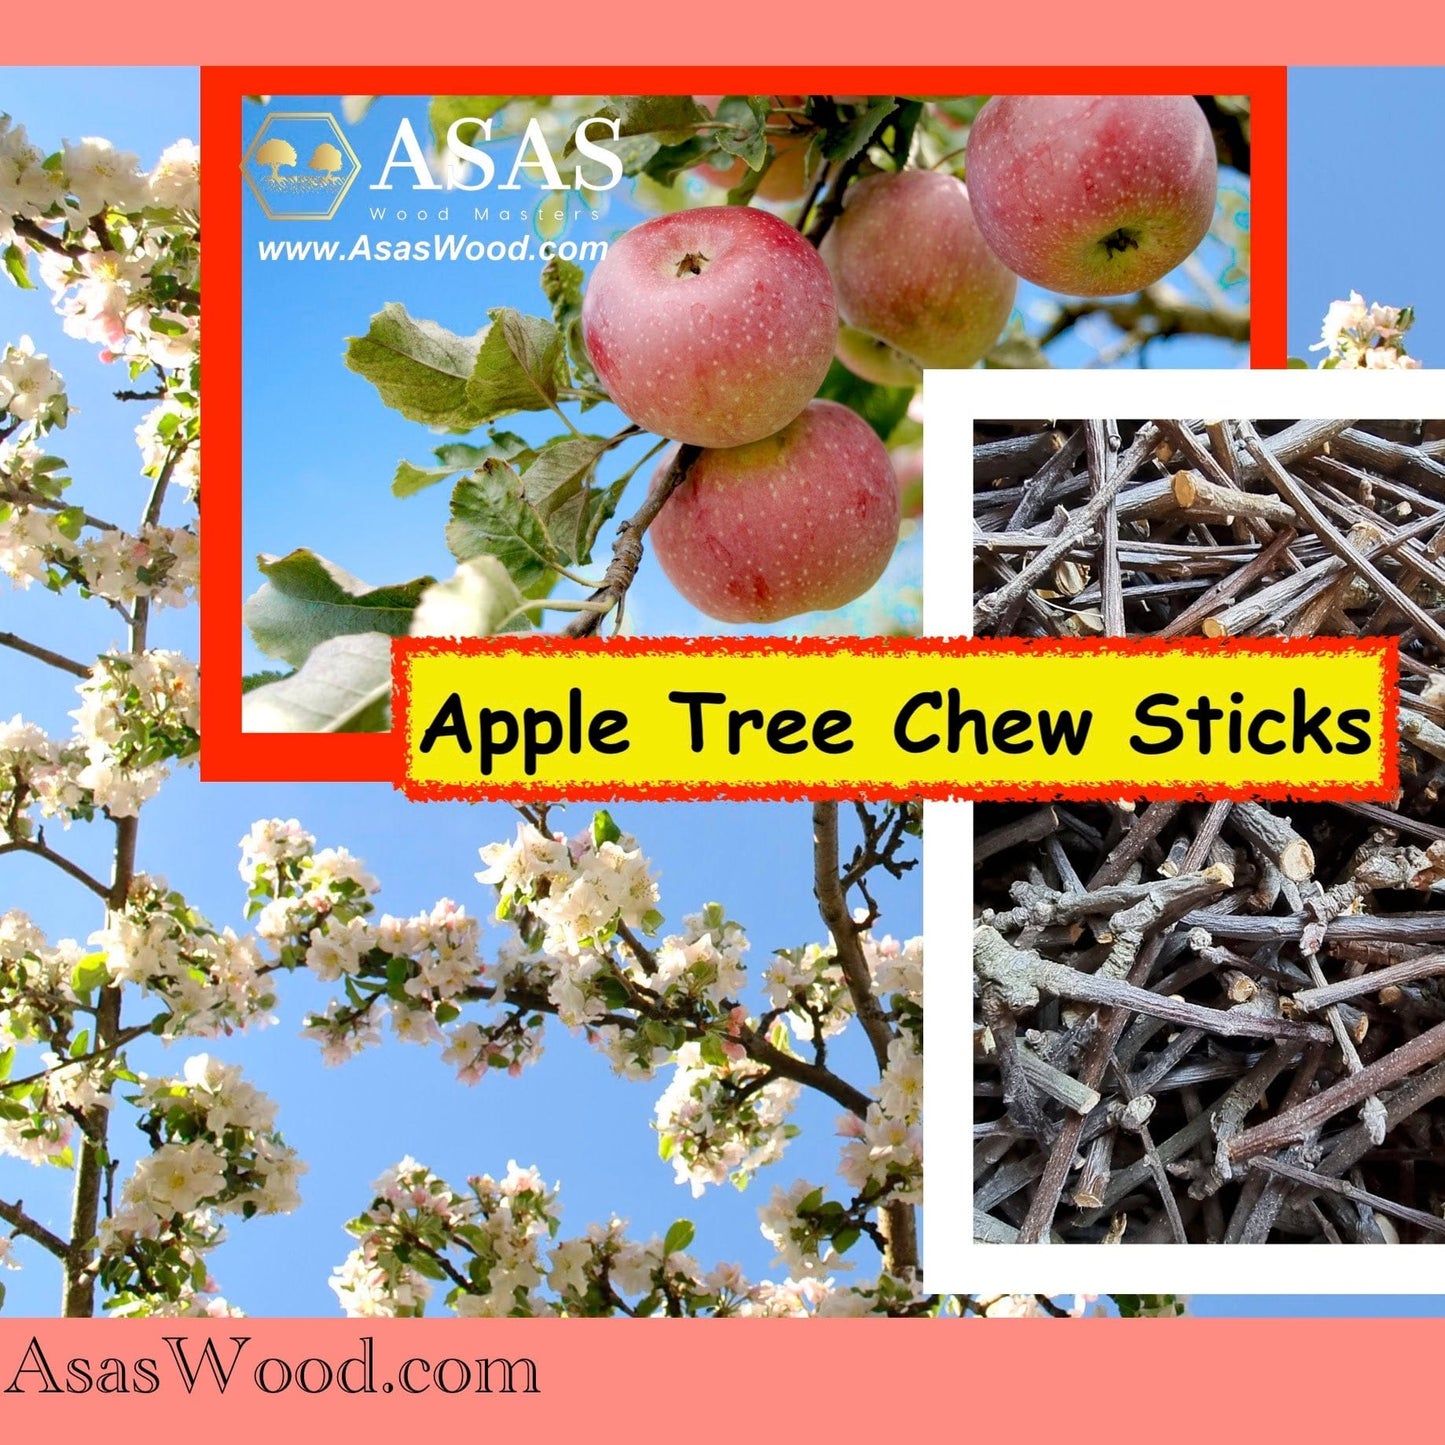 Apple Tree Chew Sticks, made by asaswood